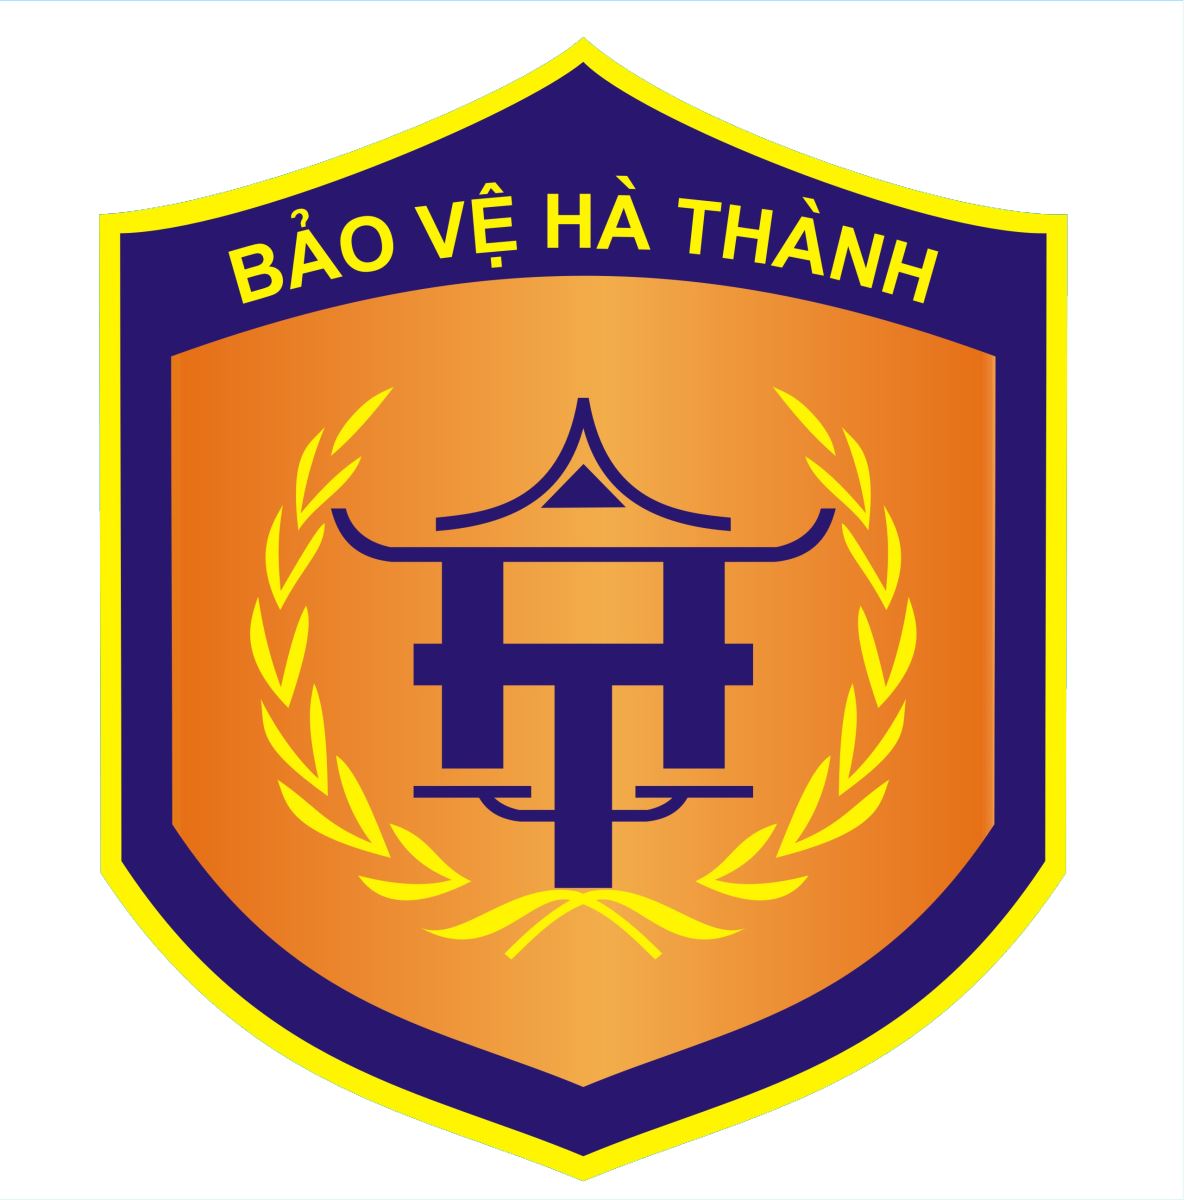 tai-sao-nhan-vien-bao-ve-phai-mac-dong-phuc